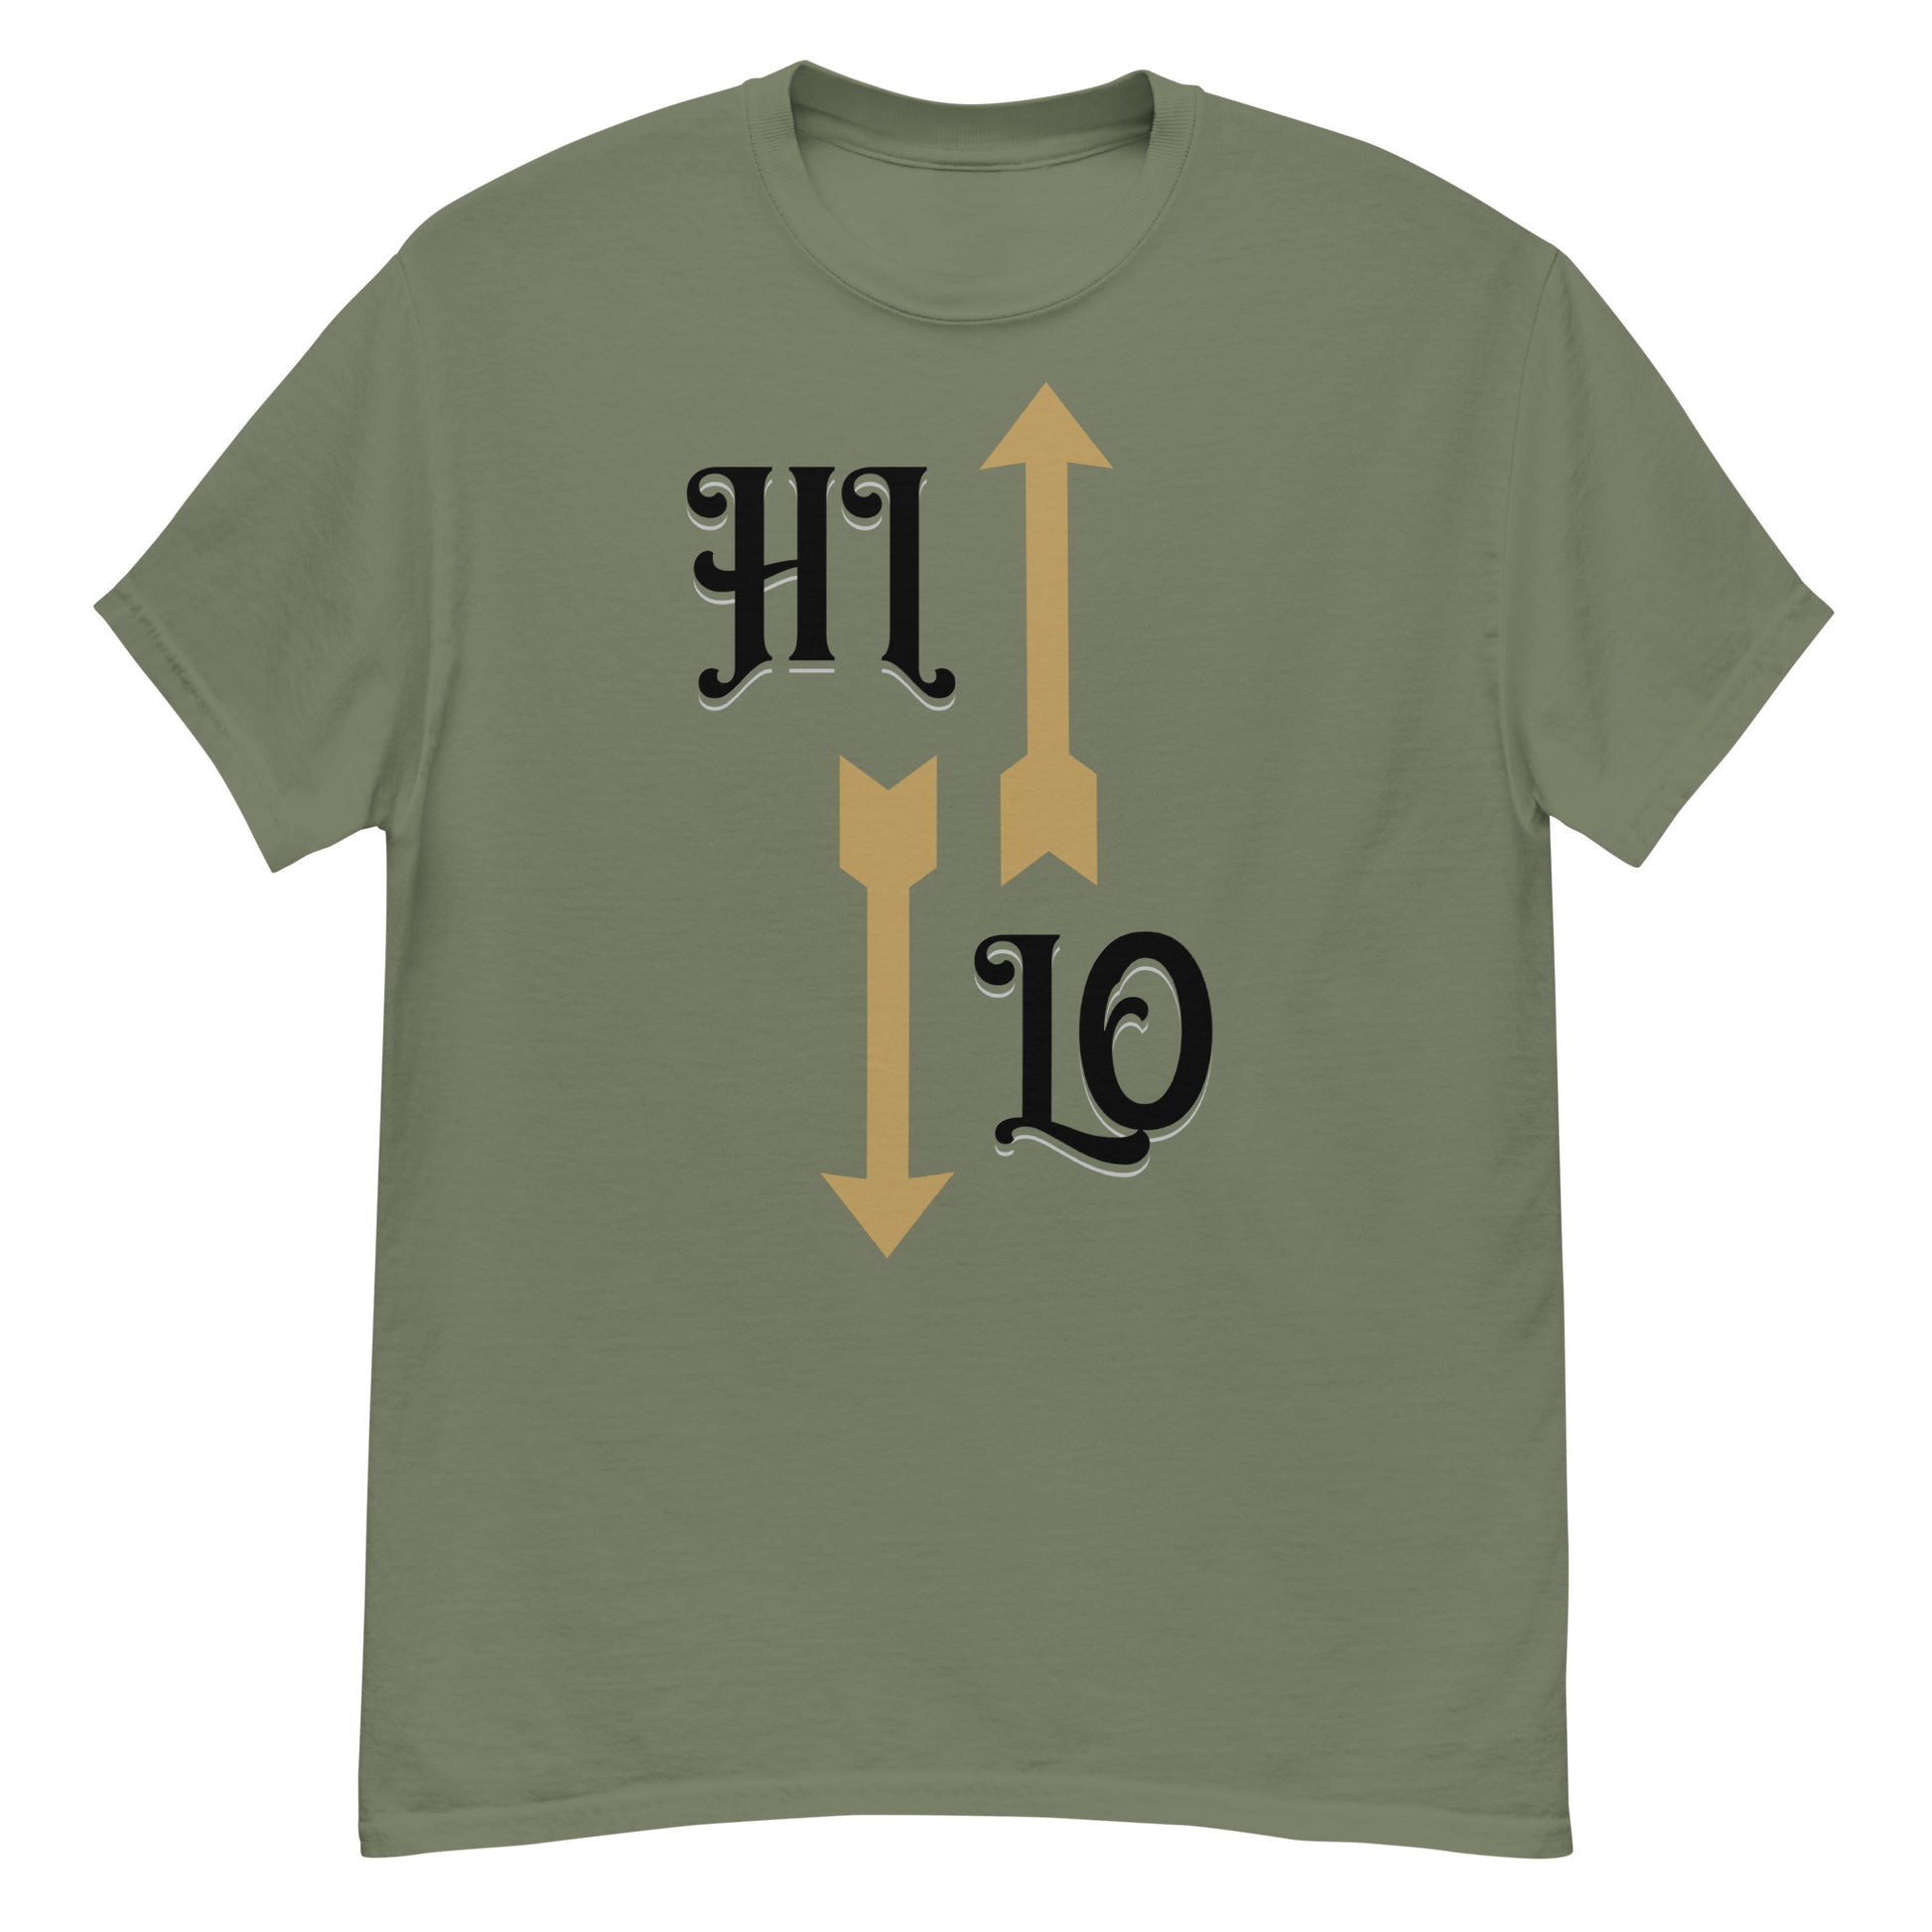 HI-LO Craps and Dice Shirt